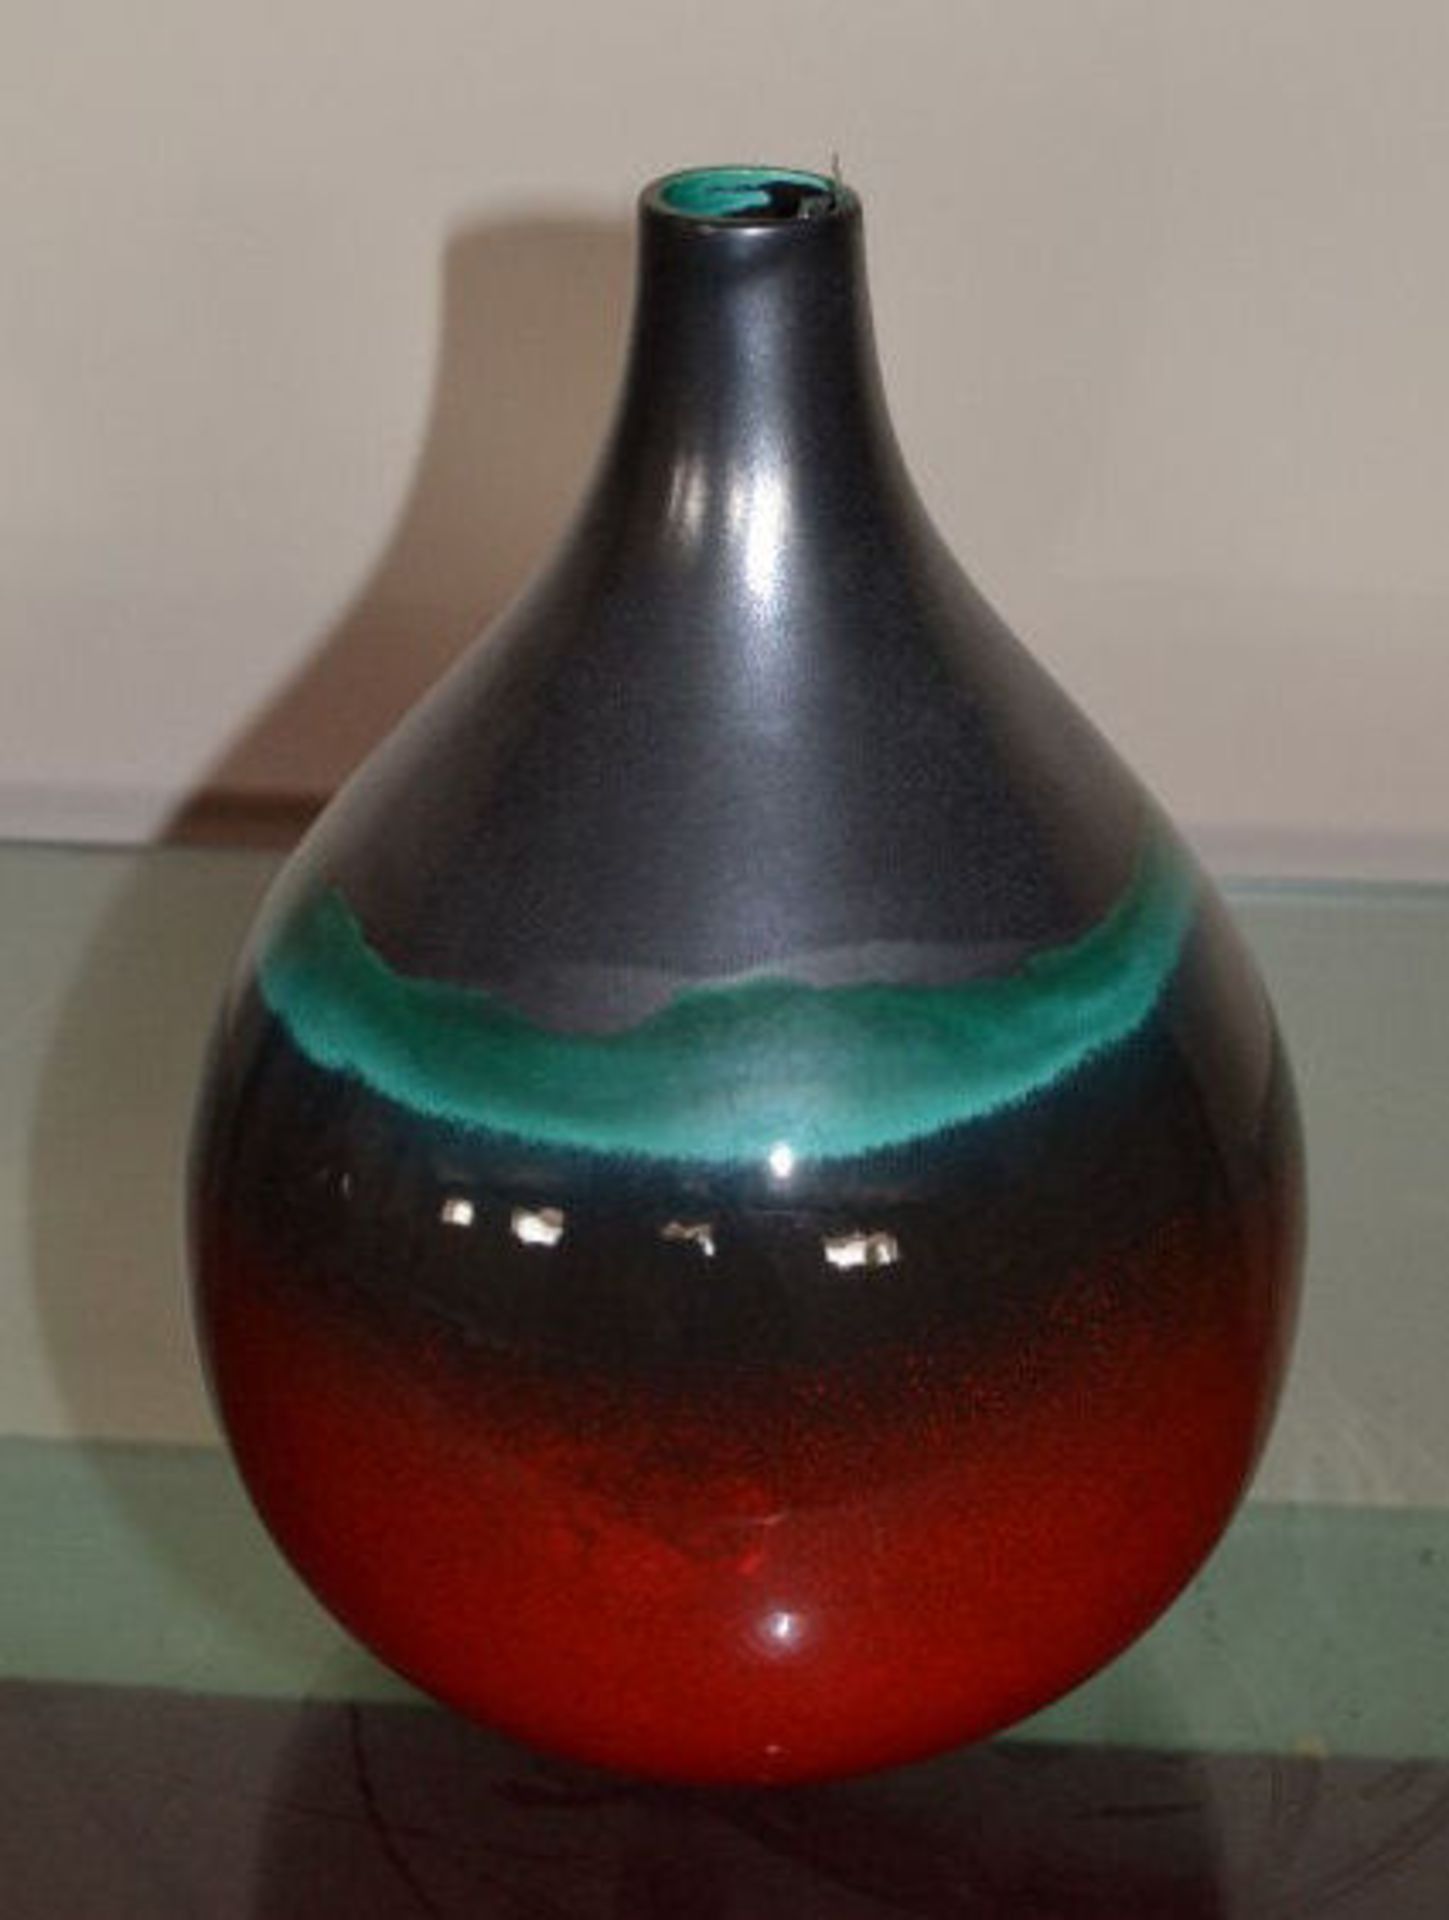 5 Assorted Decorative Vases - See Description For Details - Image 3 of 11